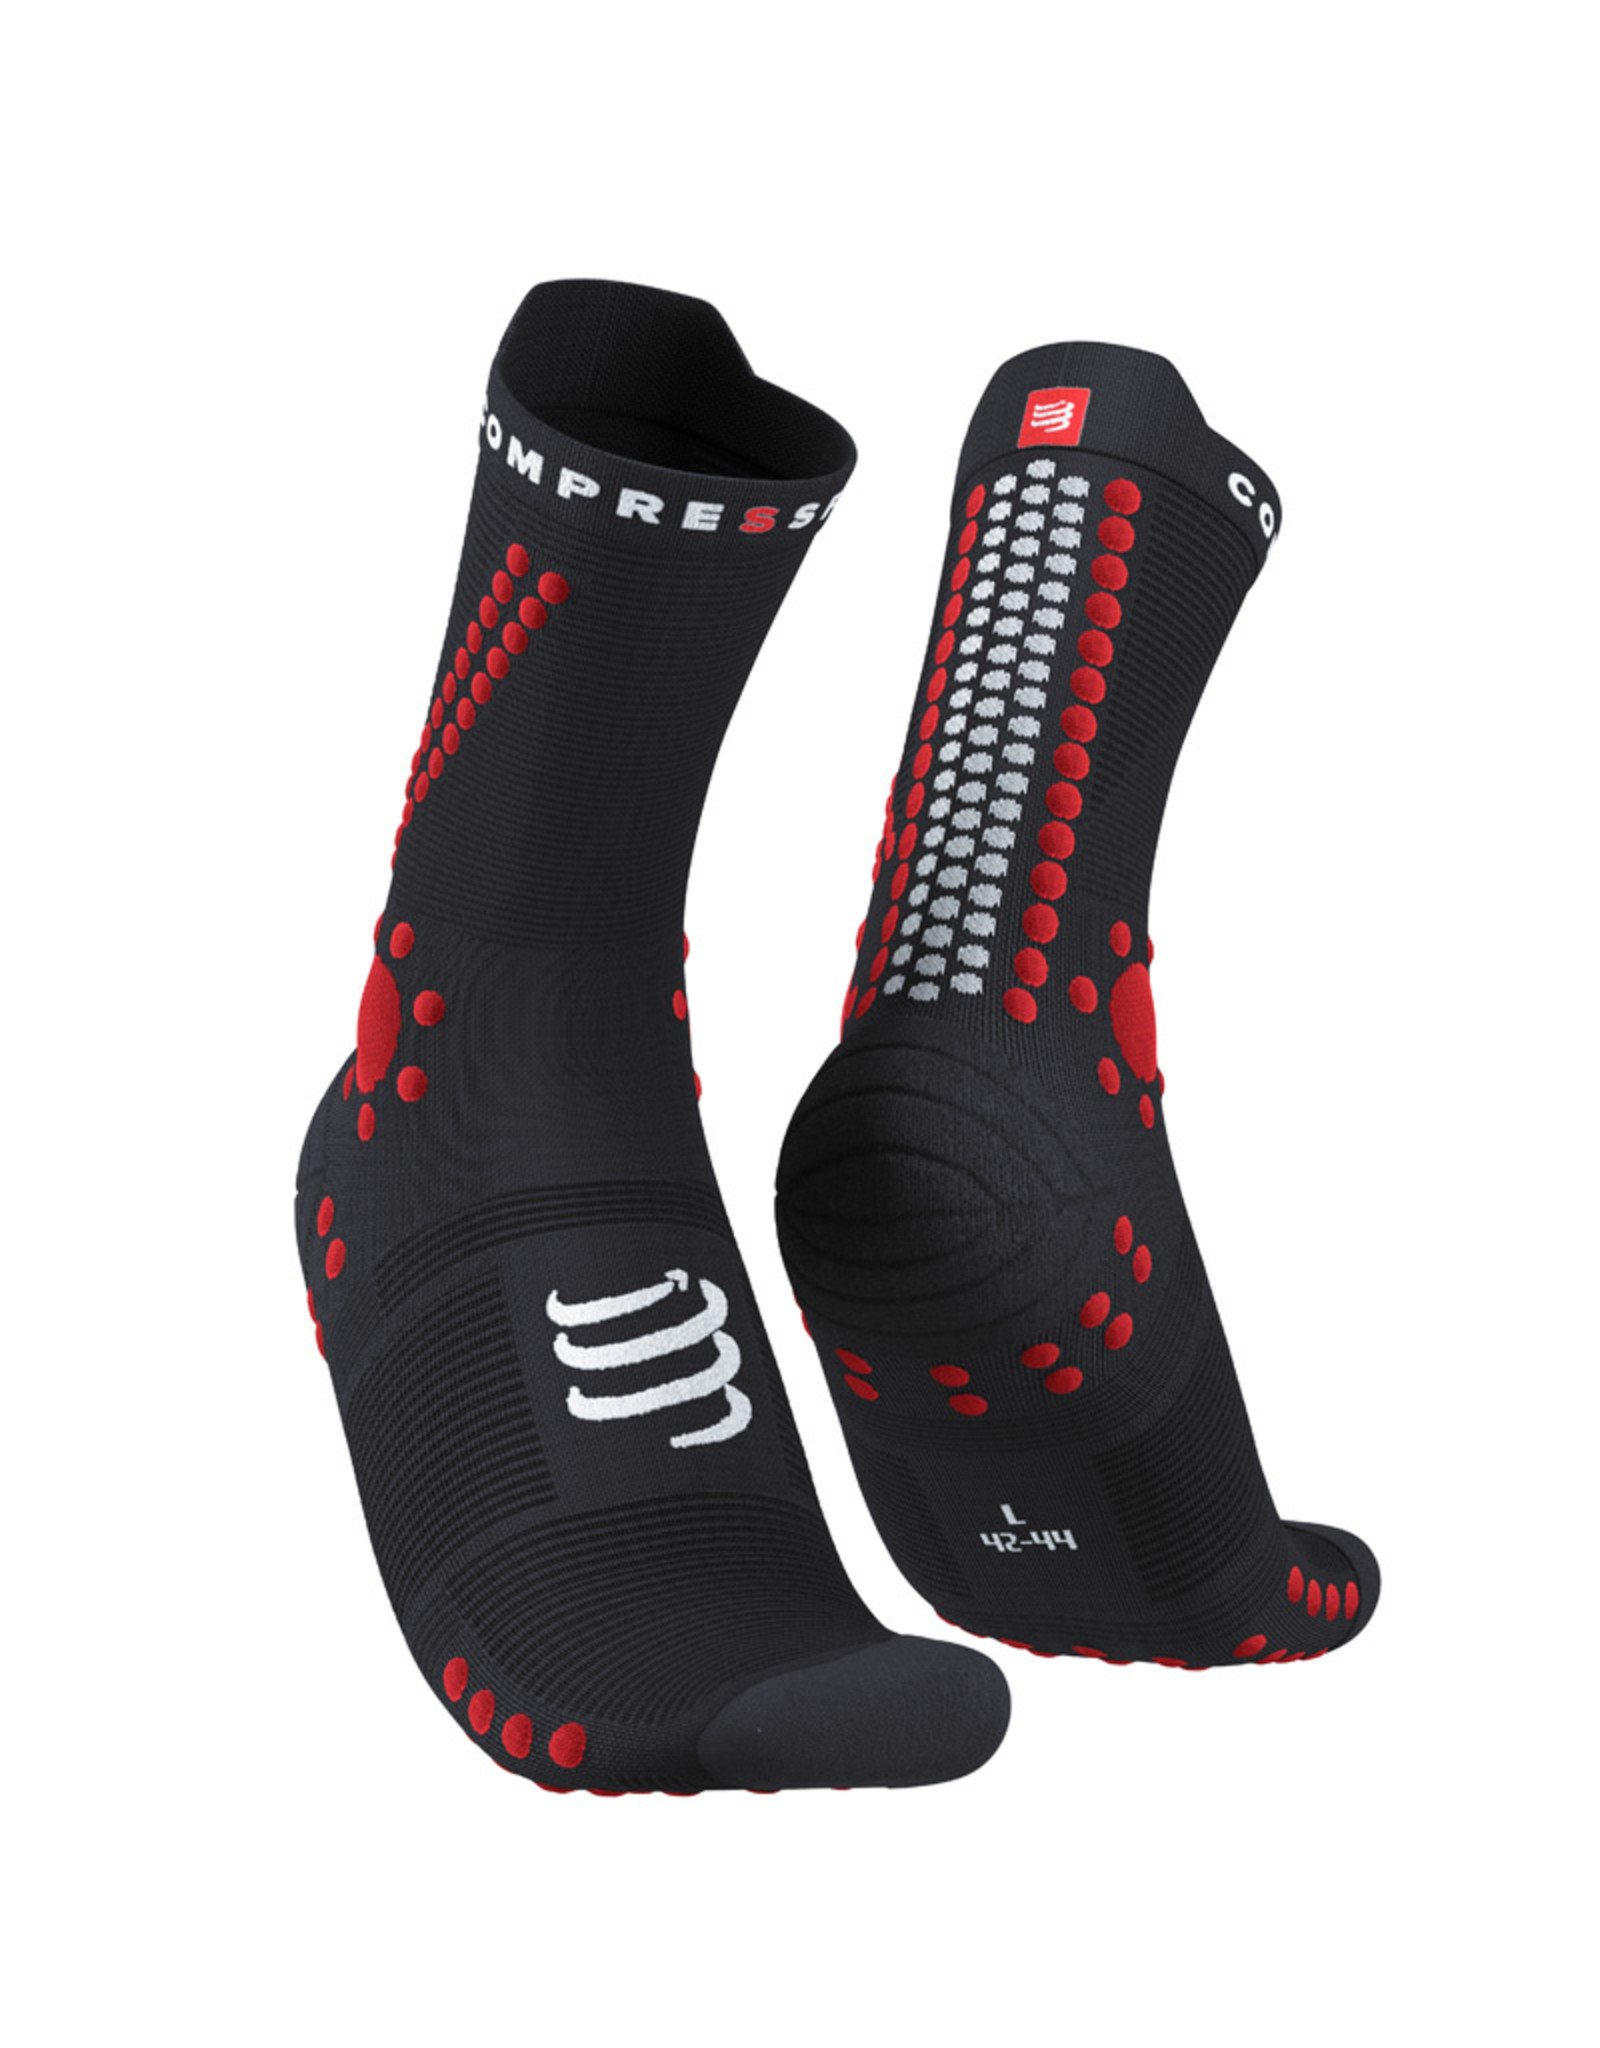 Compressport Pro Racing Socks v4.0 Trail - Black/Red